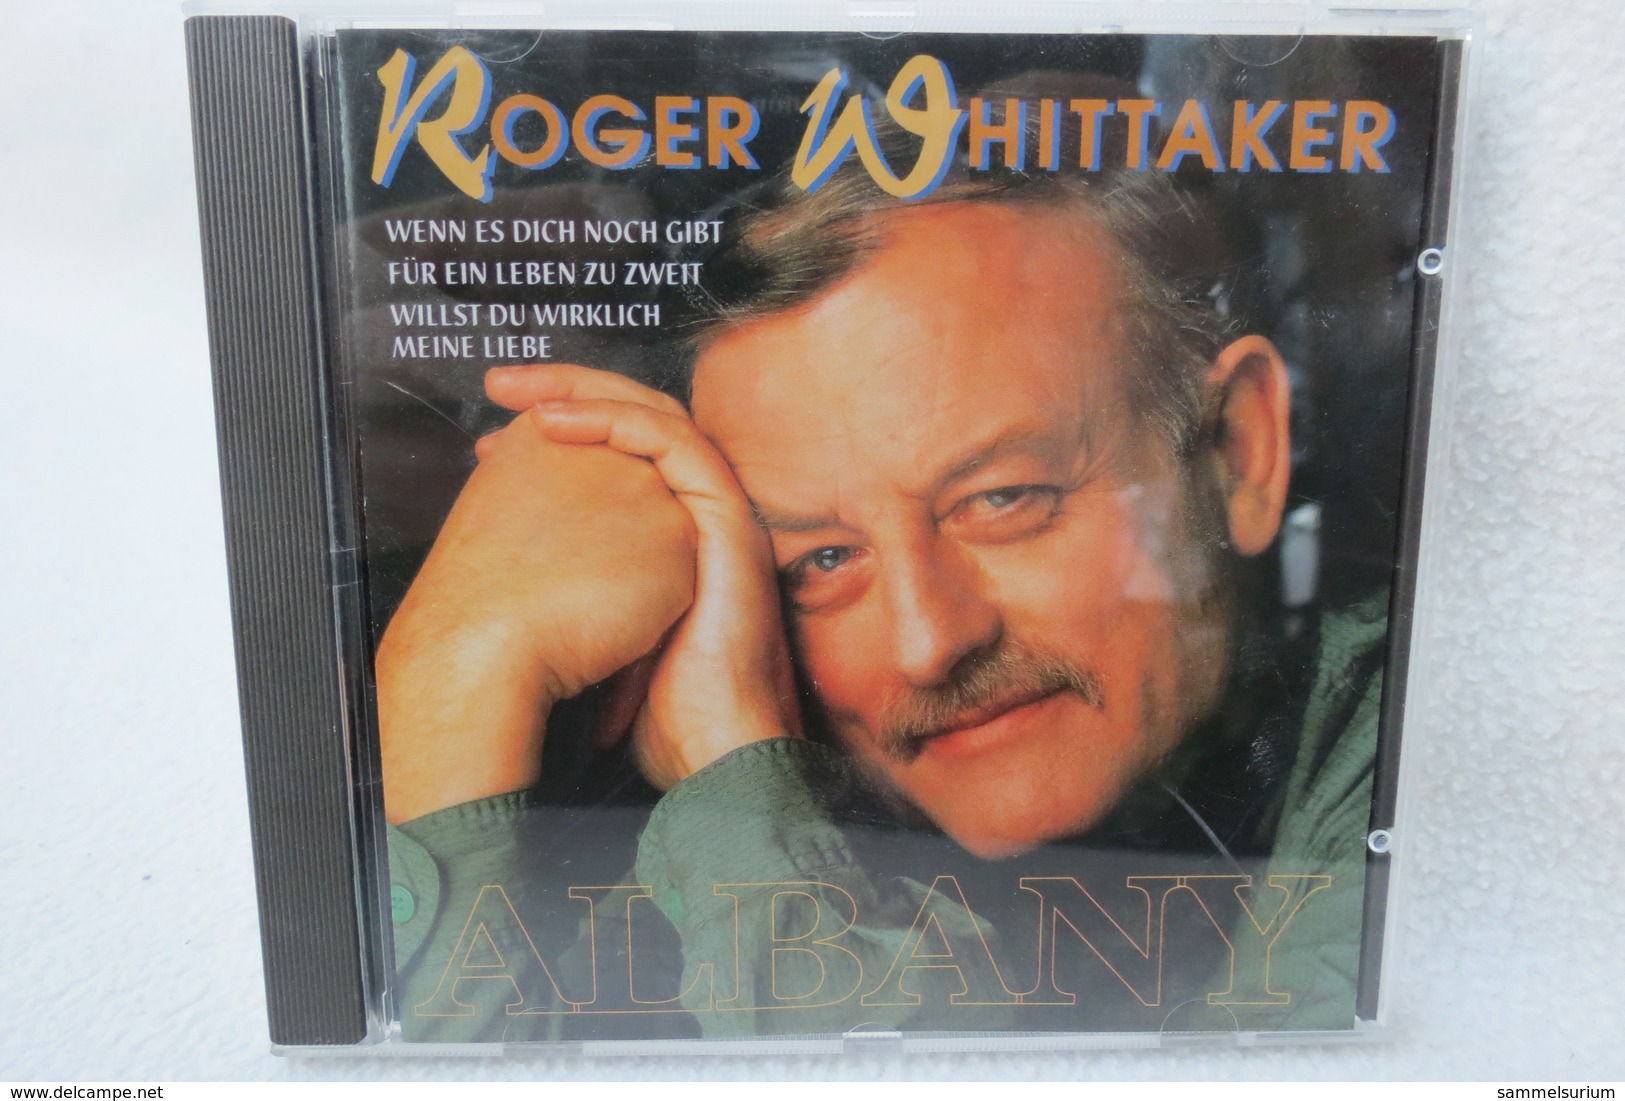 CD "Roger Whittaker" Albany - Sonstige - Deutsche Musik